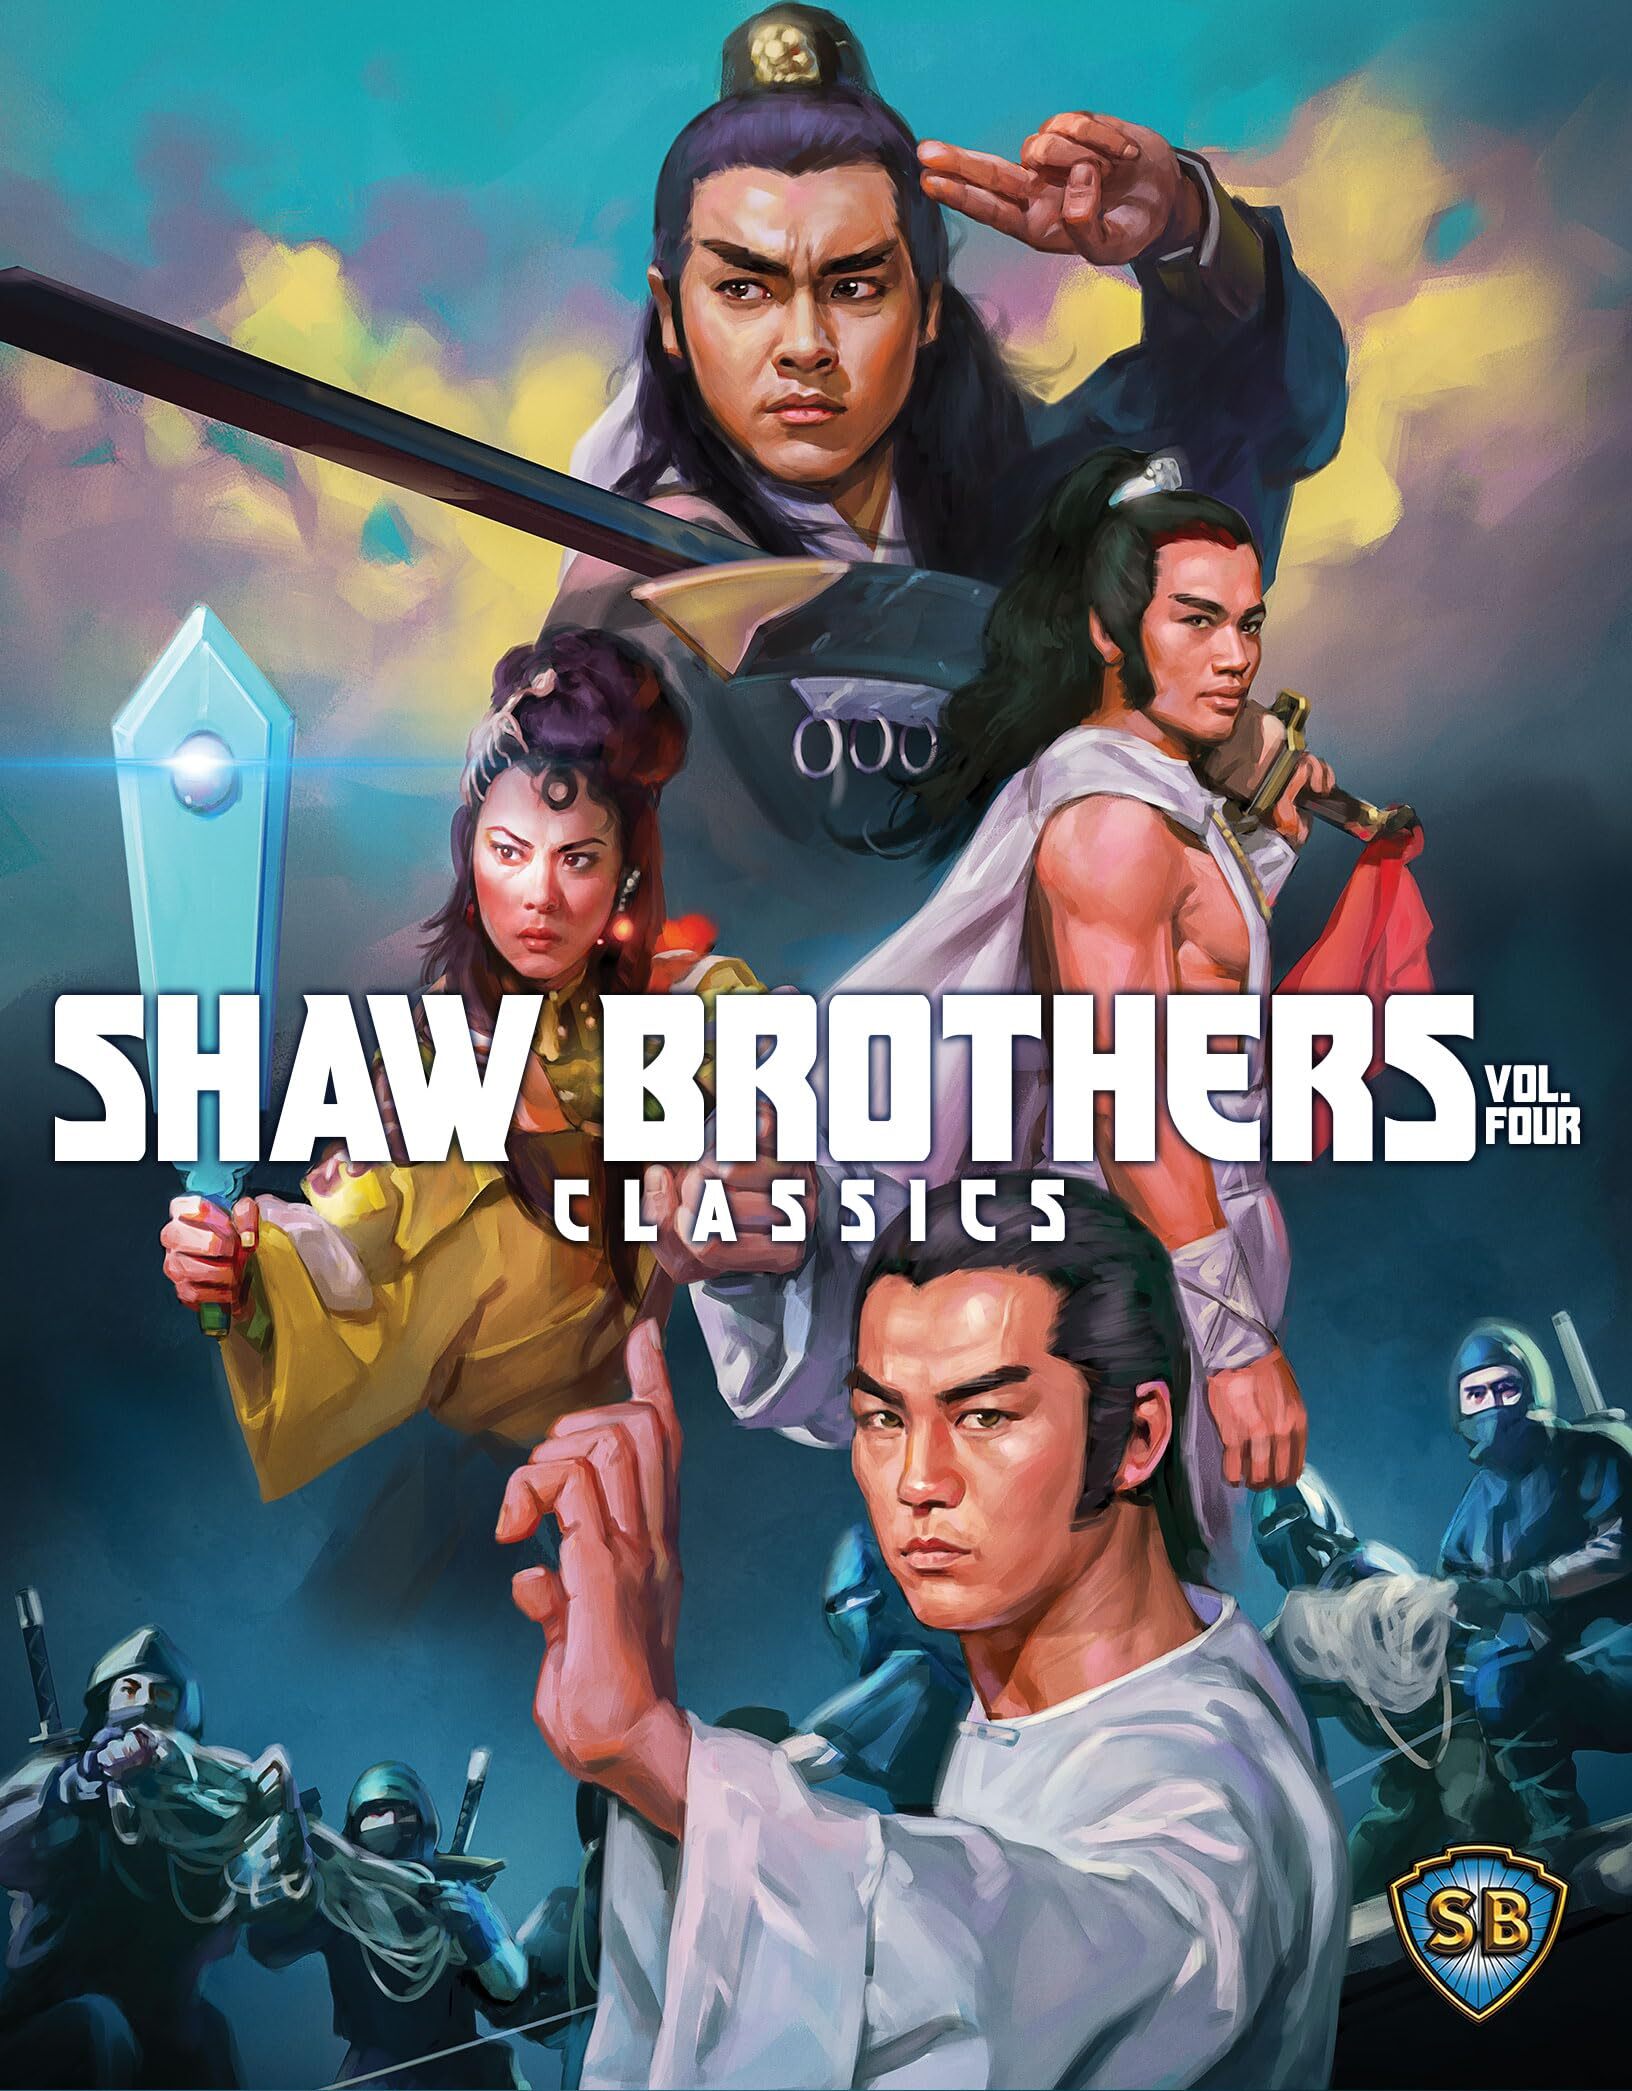 shaw brothers movies venom